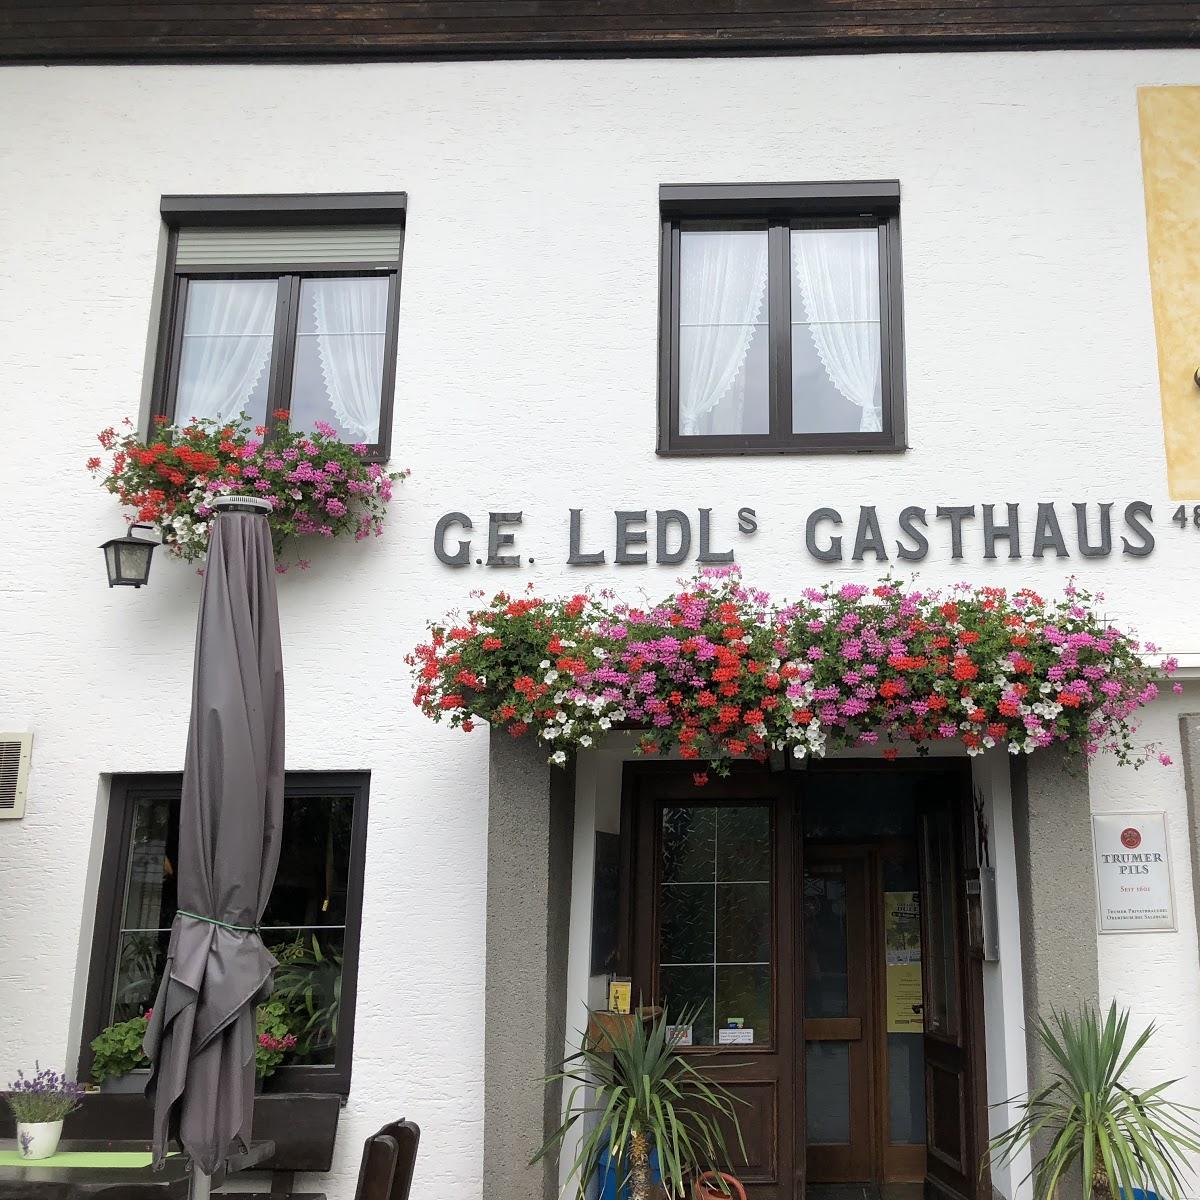 Restaurant "Gasthaus Ledl" in Lengau